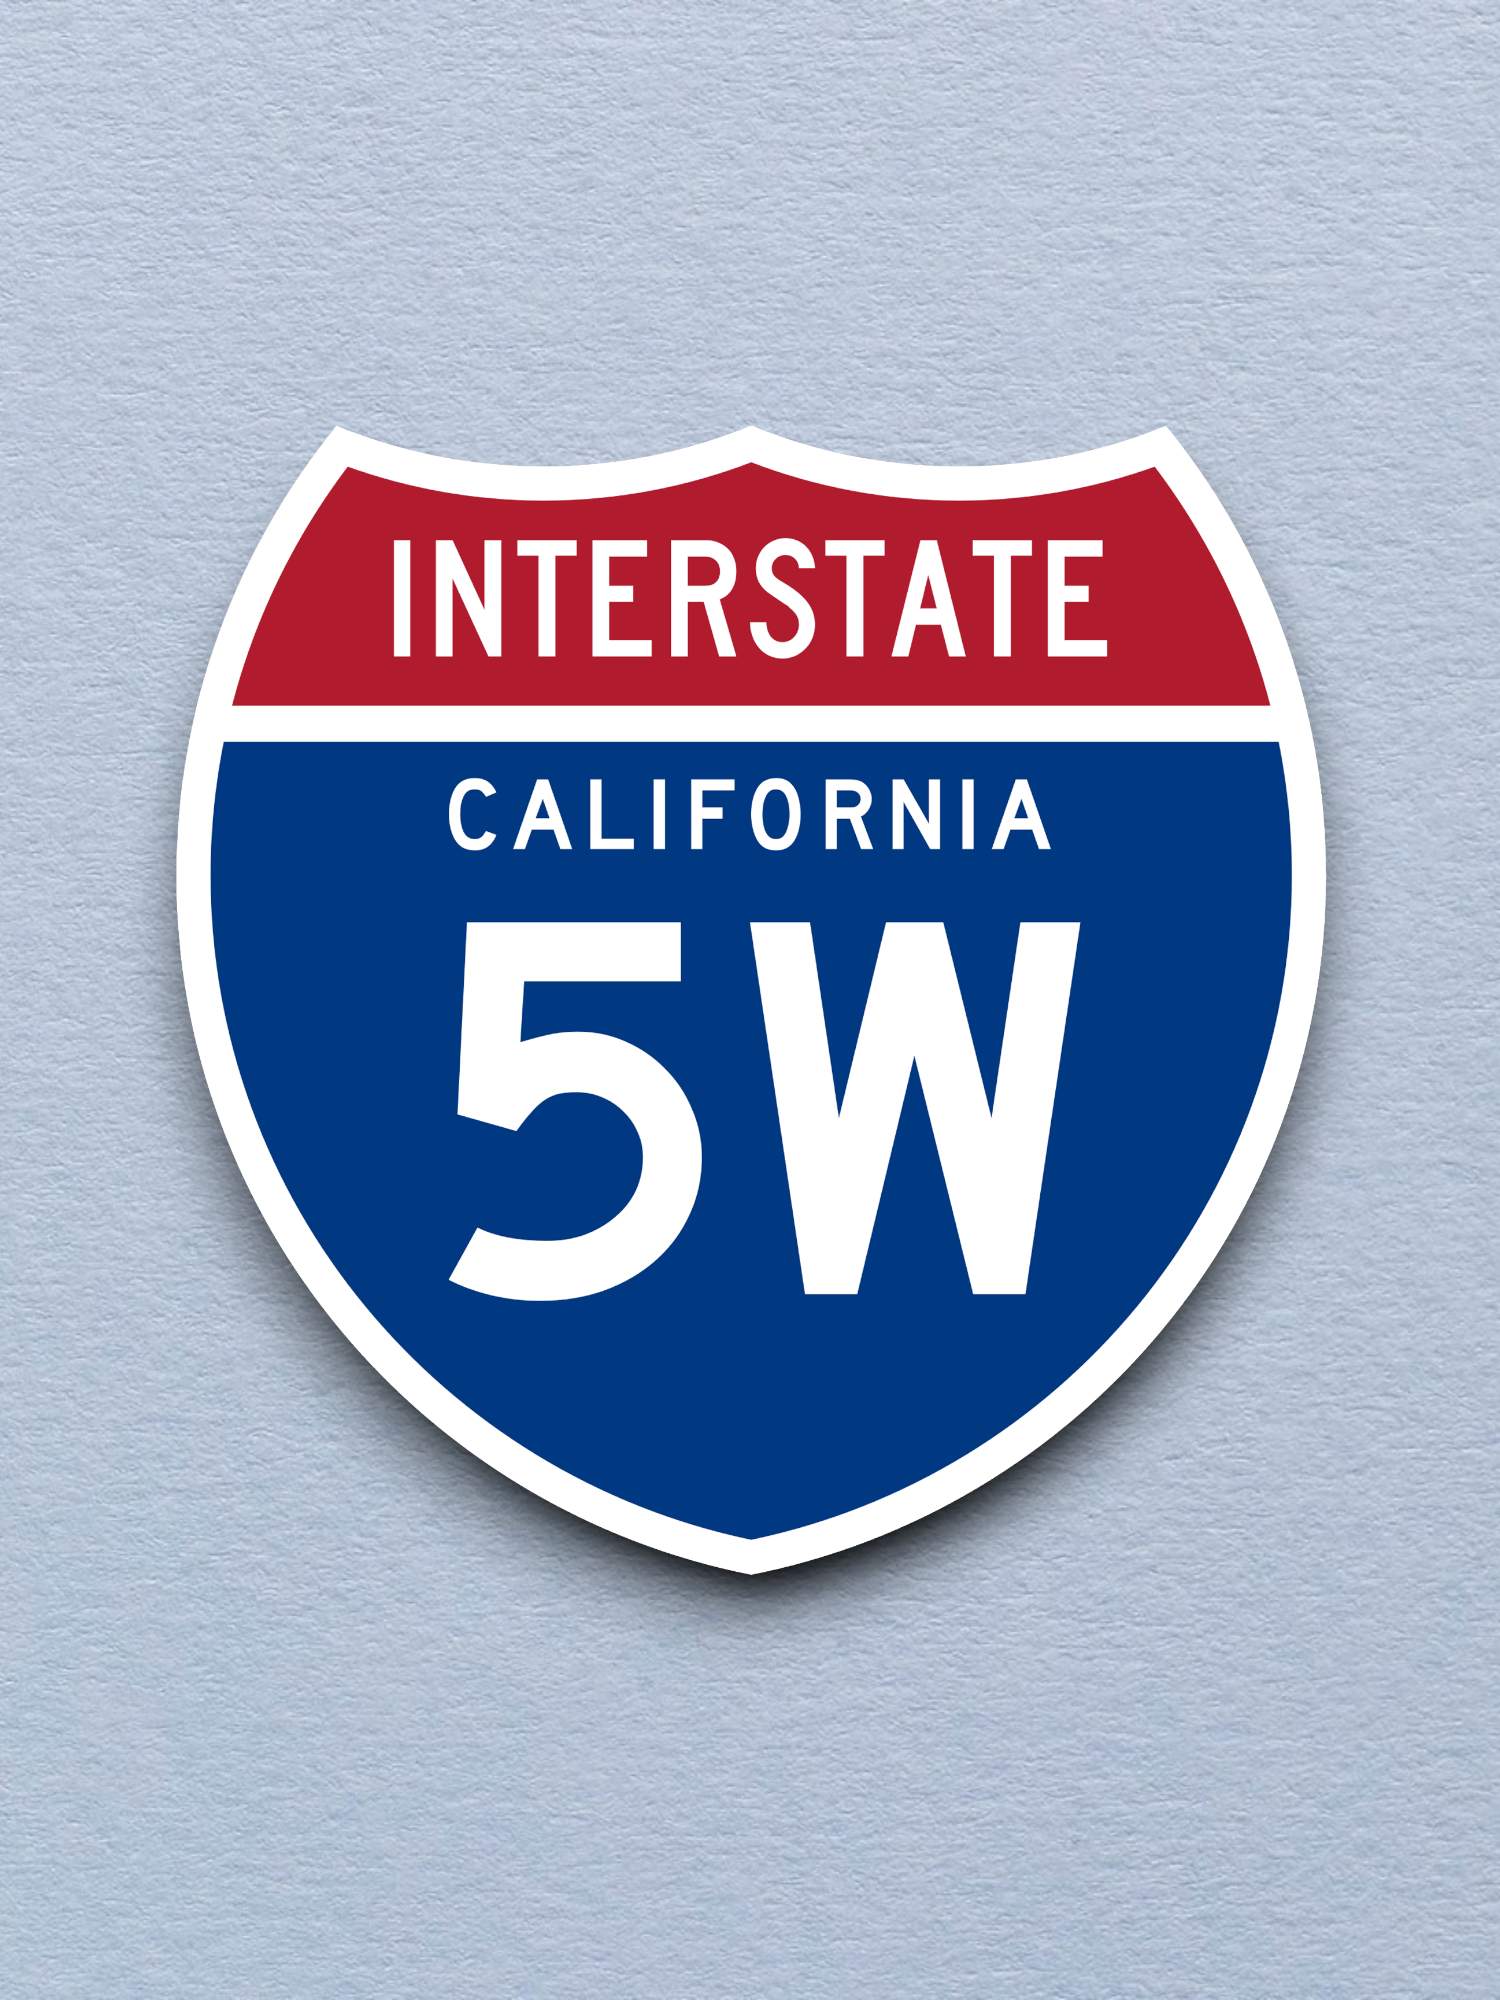 Interstate I-5W California - Road Sign Sticker